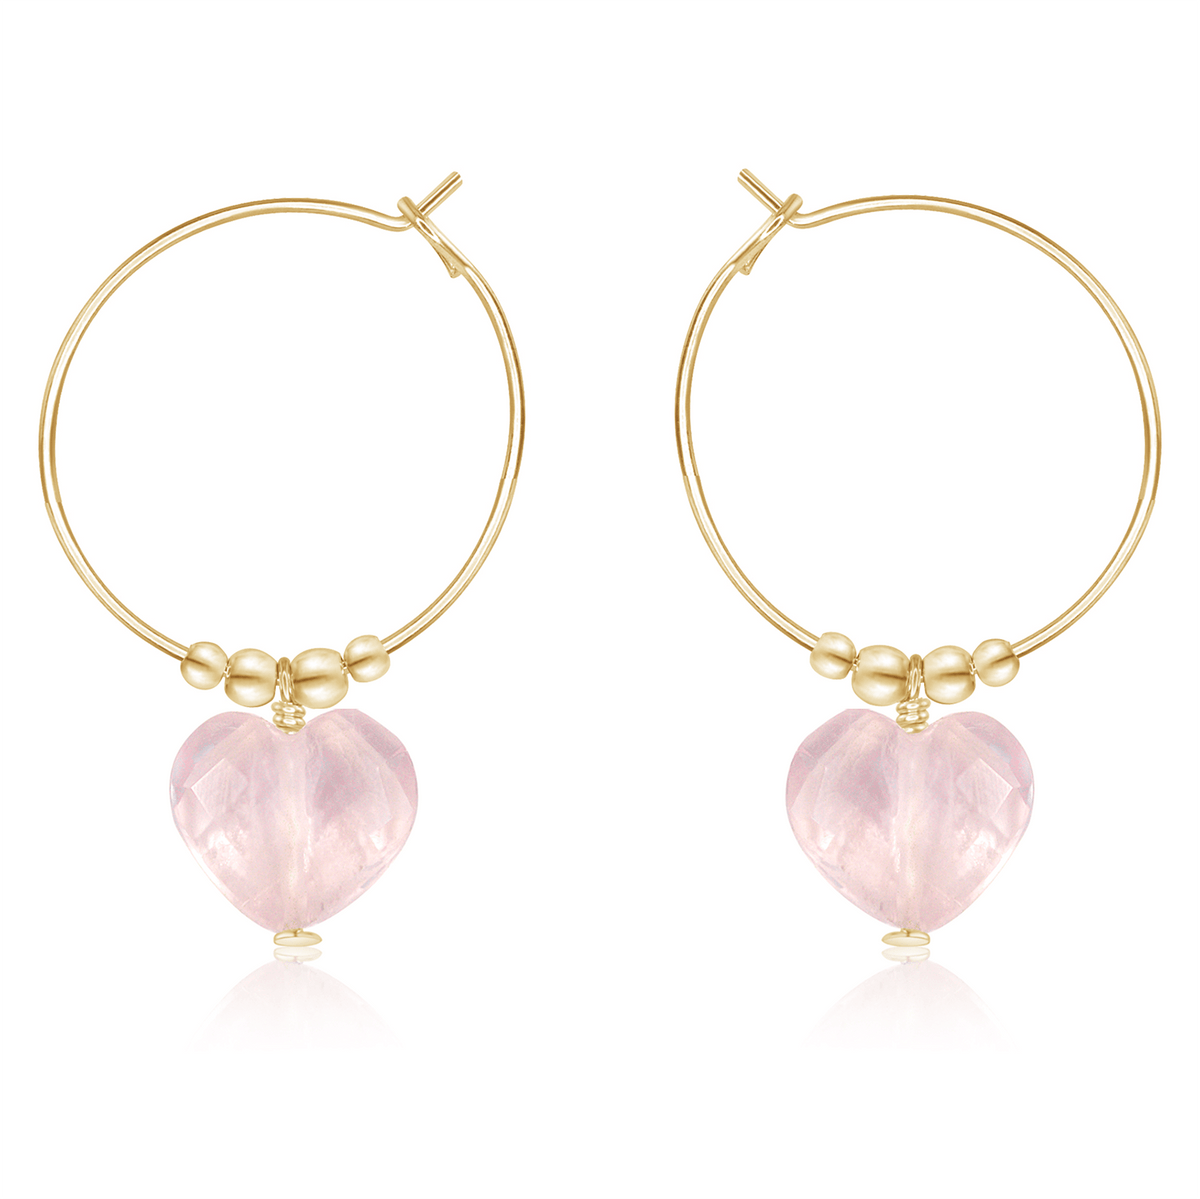 Rose Quartz Crystal Heart Dangle Hoop Earrings - Rose Quartz Crystal Heart Dangle Hoop Earrings - 14k Gold Fill - Luna Tide Handmade Crystal Jewellery